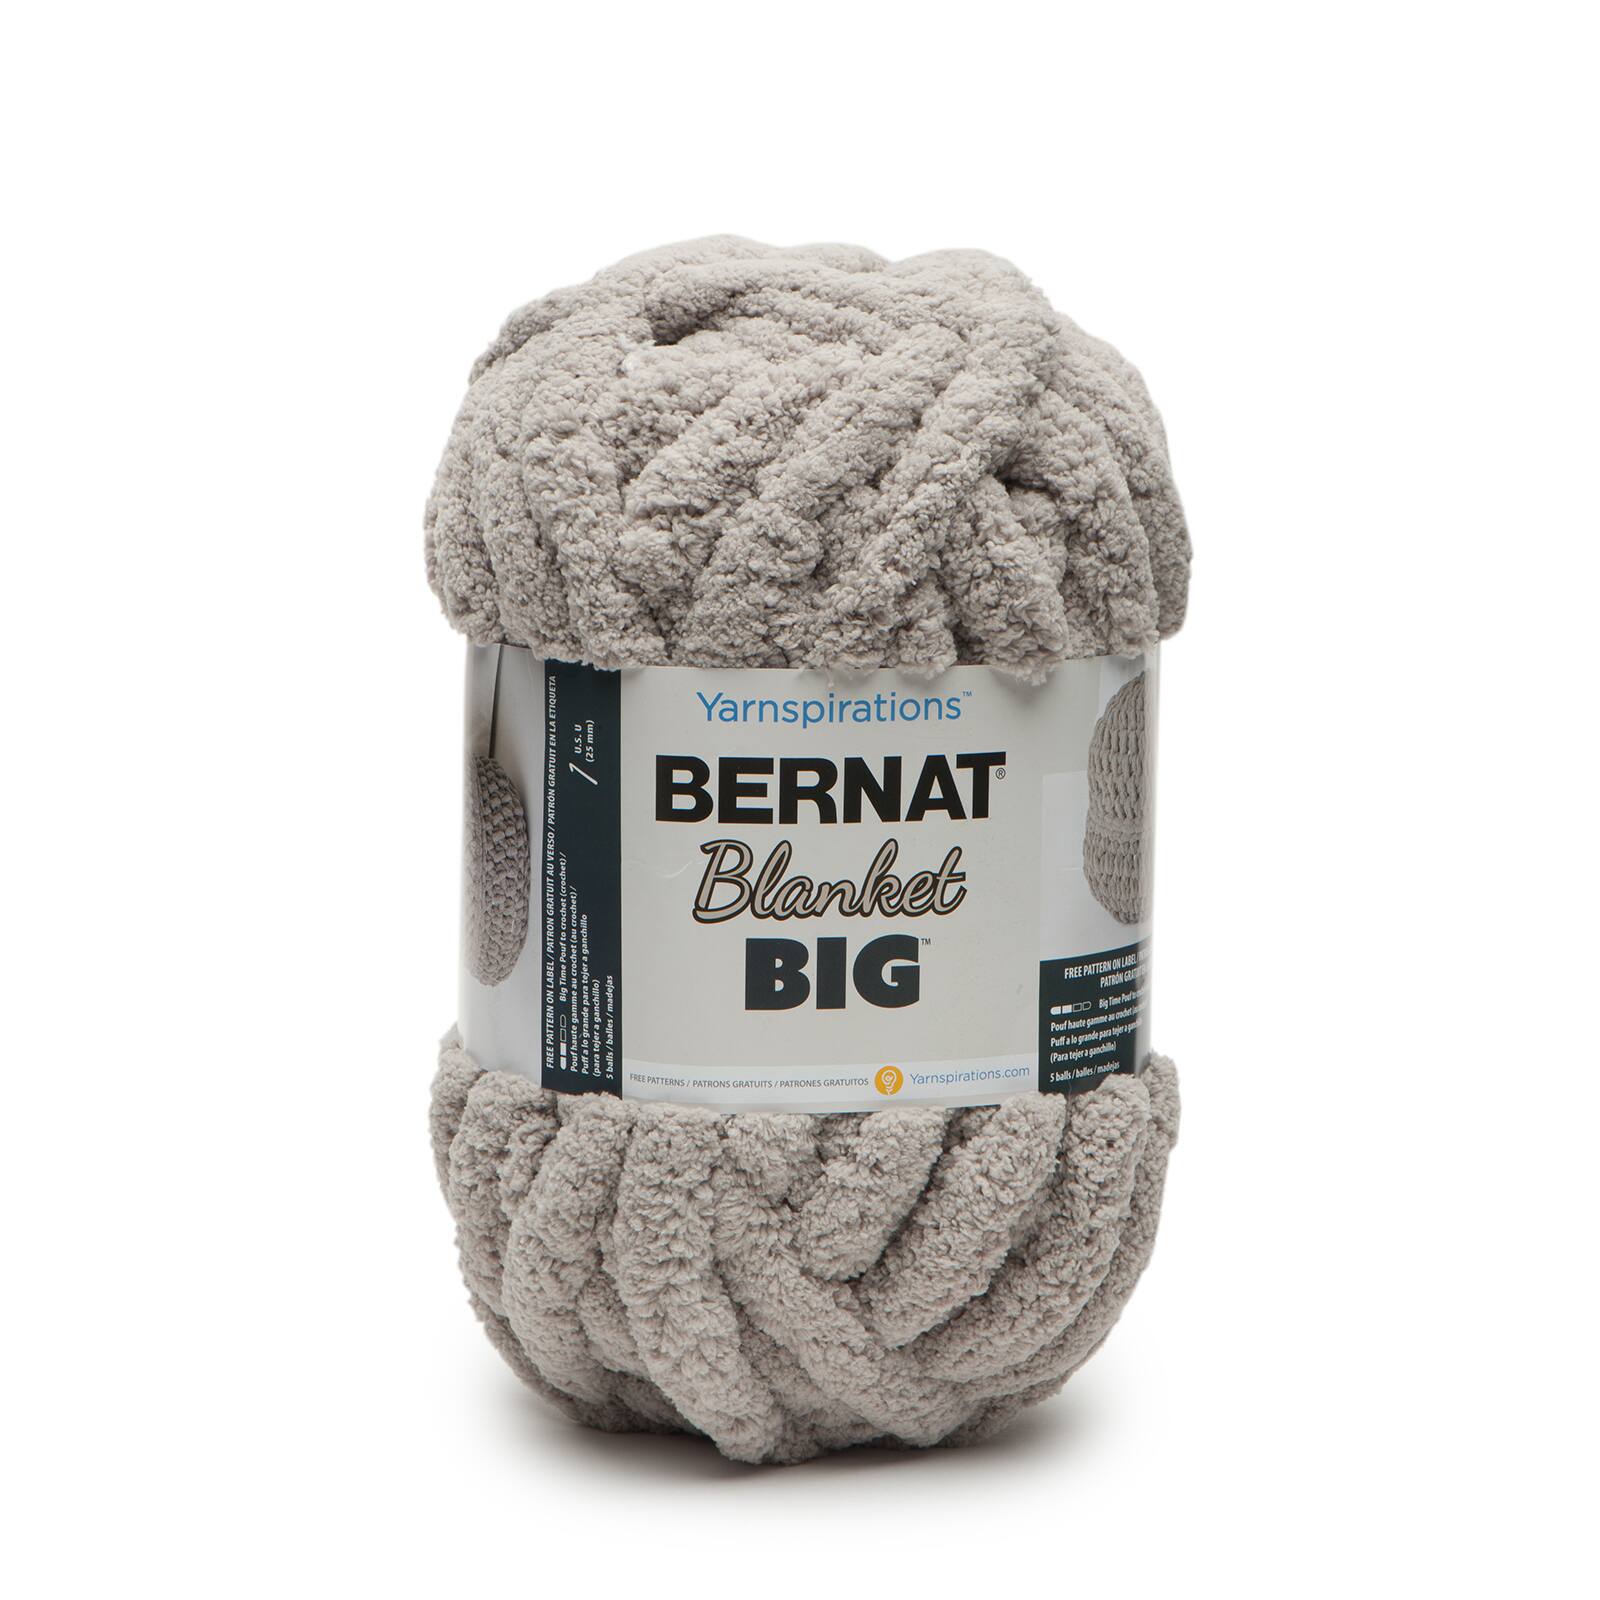 Bernat Big Blanket, Other, Bernat Big Blanket Yarn Brand New 32 Yards  5oz300g French Vanilla